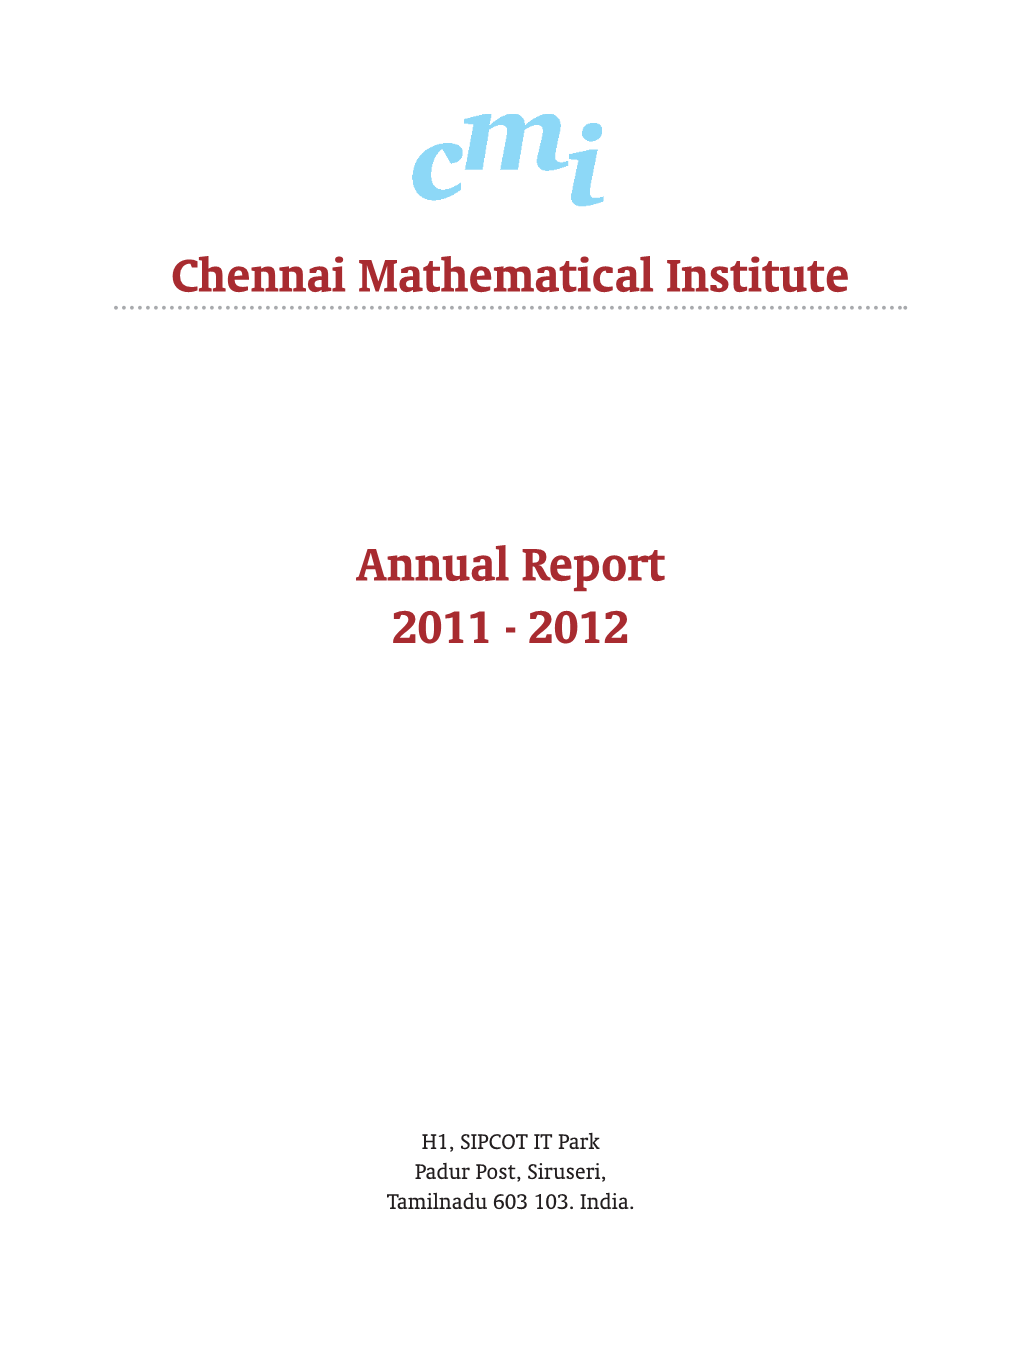 Chennai Mathematical Institute Annual Report 2011 - 2012 75 76 Chennai Mathematical Institute